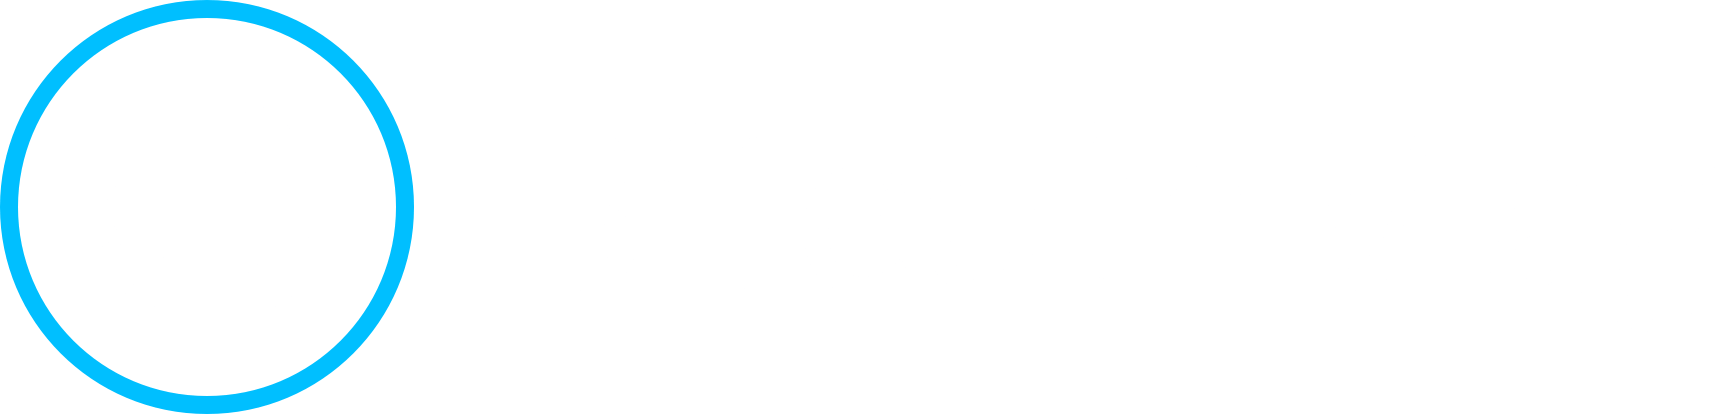 BitcoinMag.de